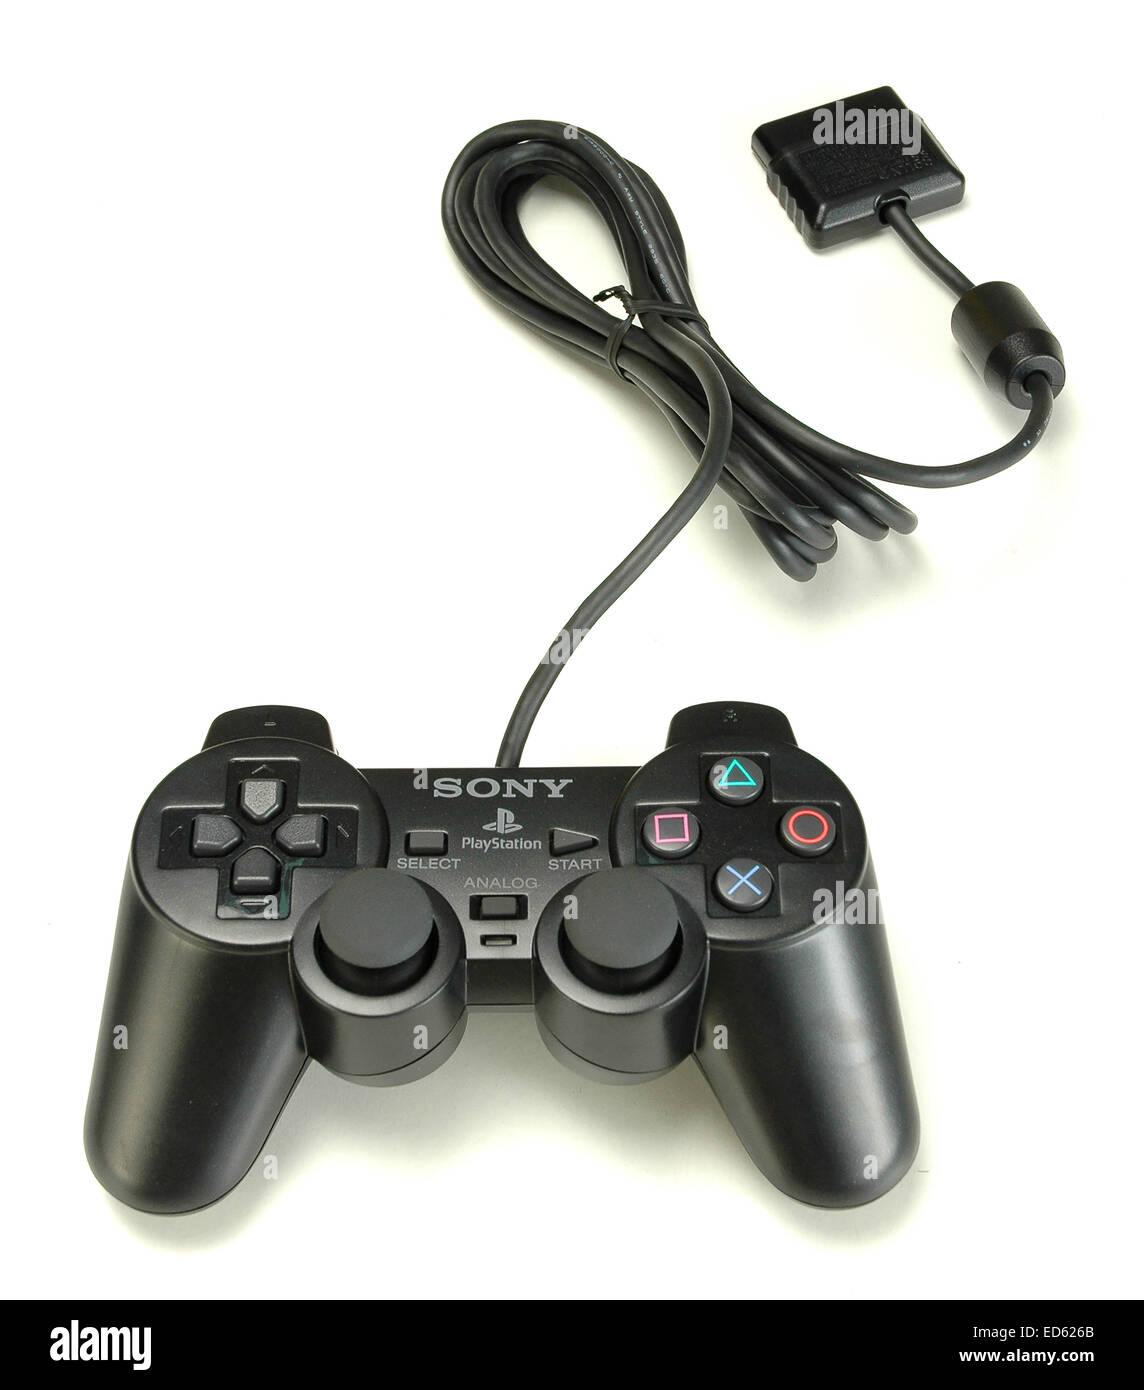 Sony Playstation PS gamepad Stock Photo - Alamy